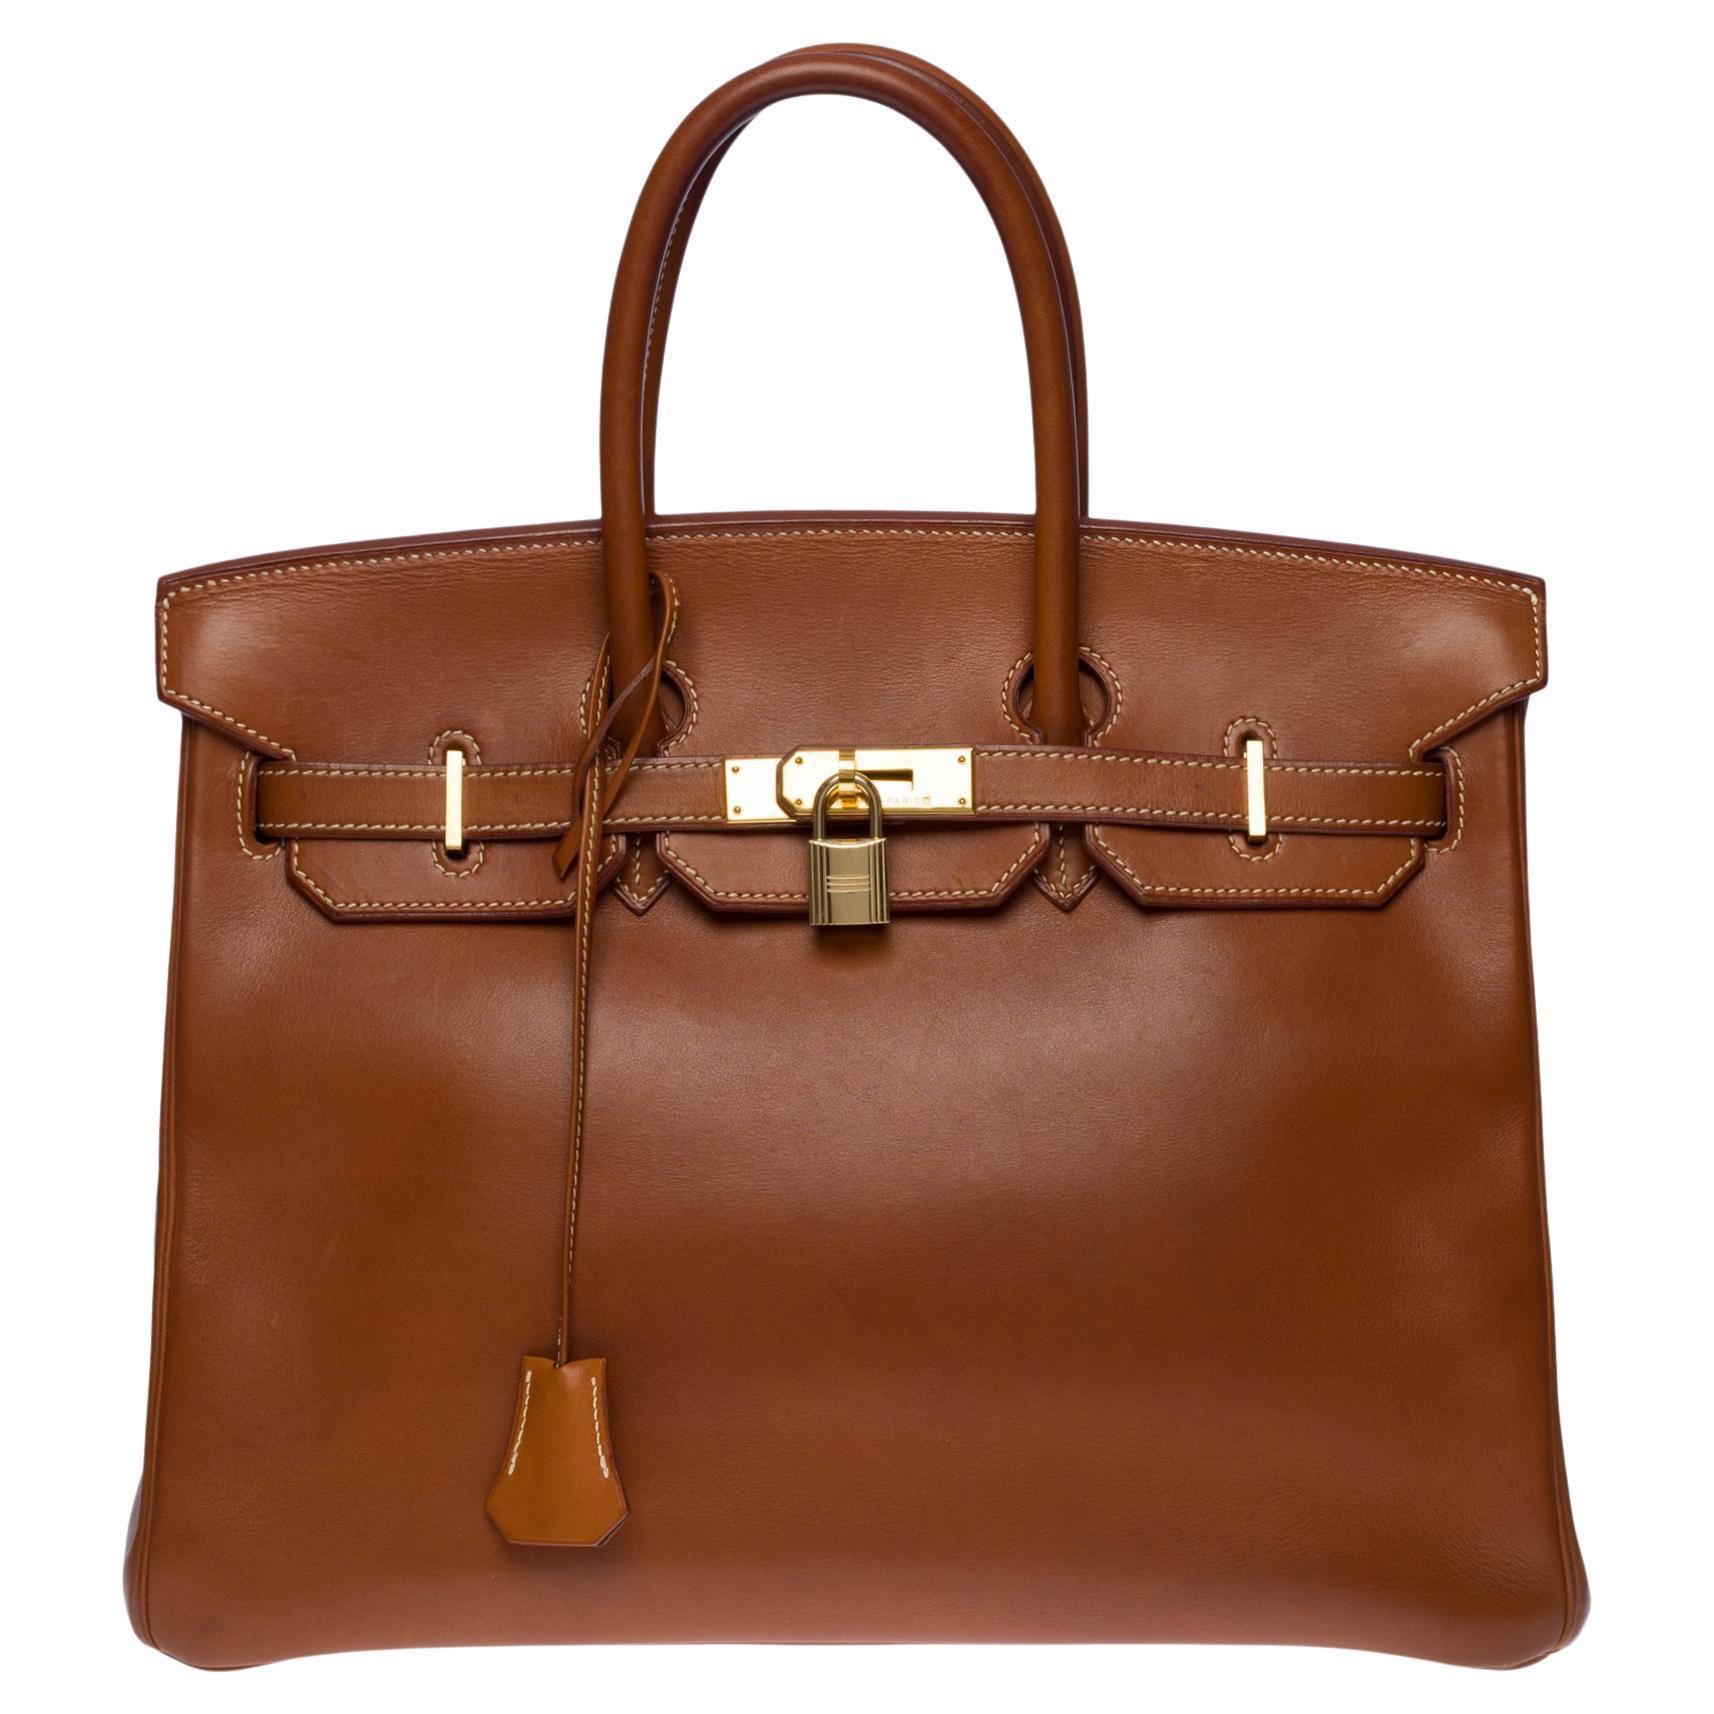 Rare & Exceptional Hermès Birkin 35 handbag in Gold Barenia leather, GHW